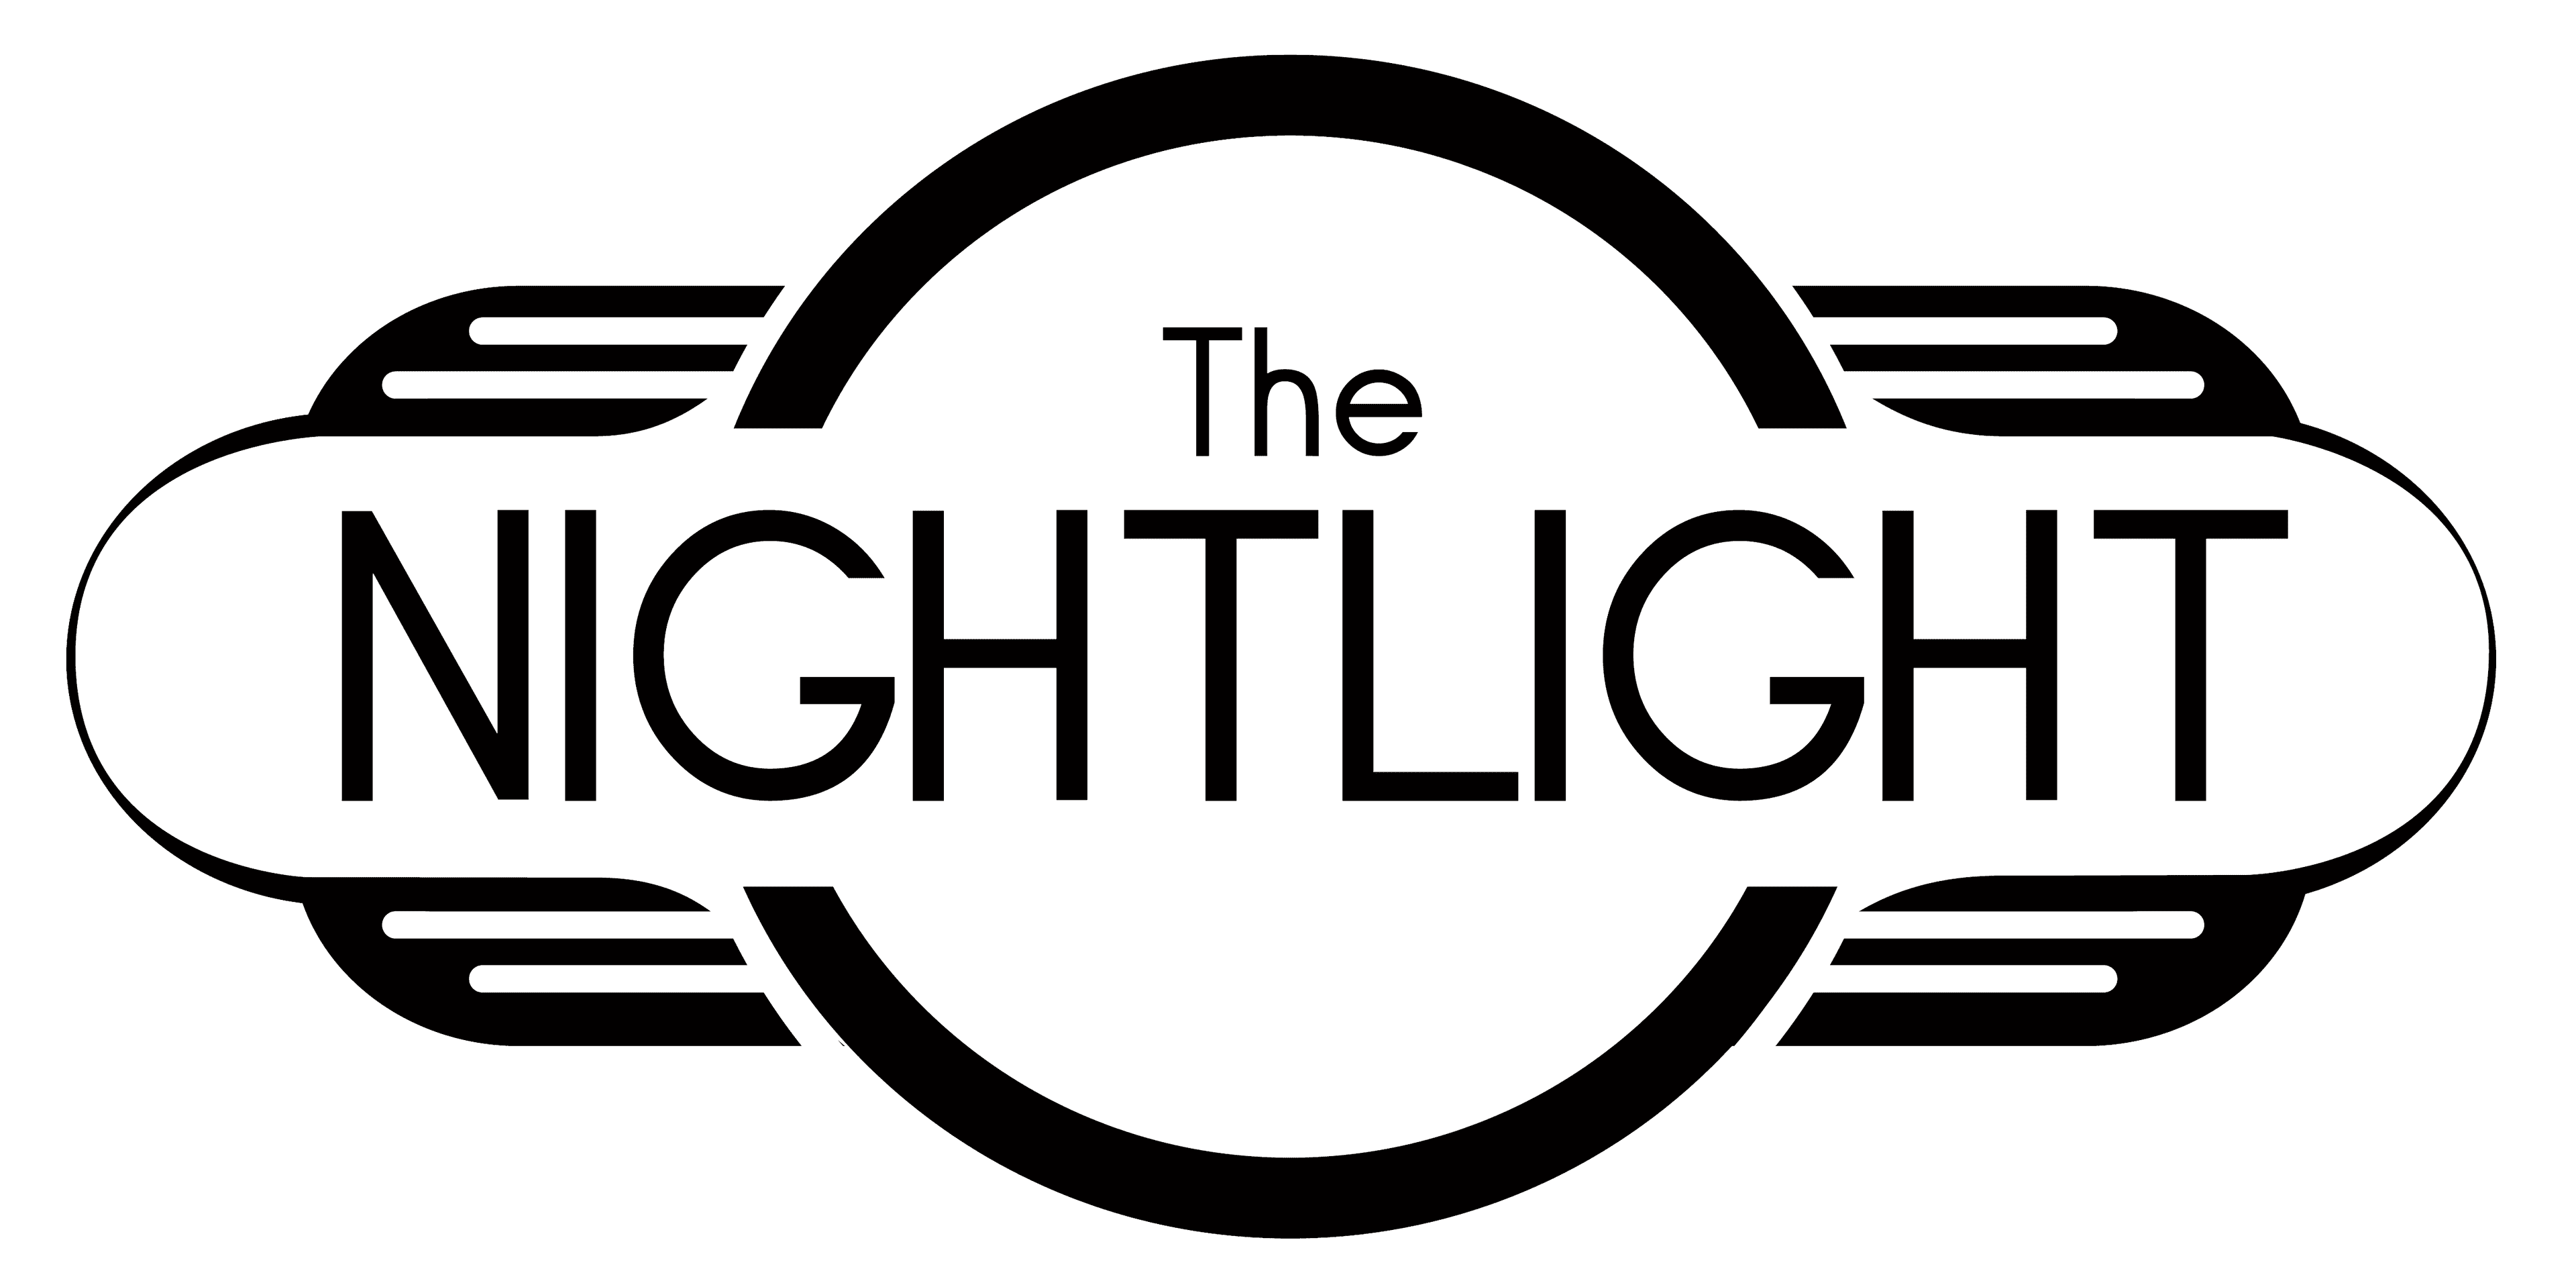 Nightlight Cinema, The